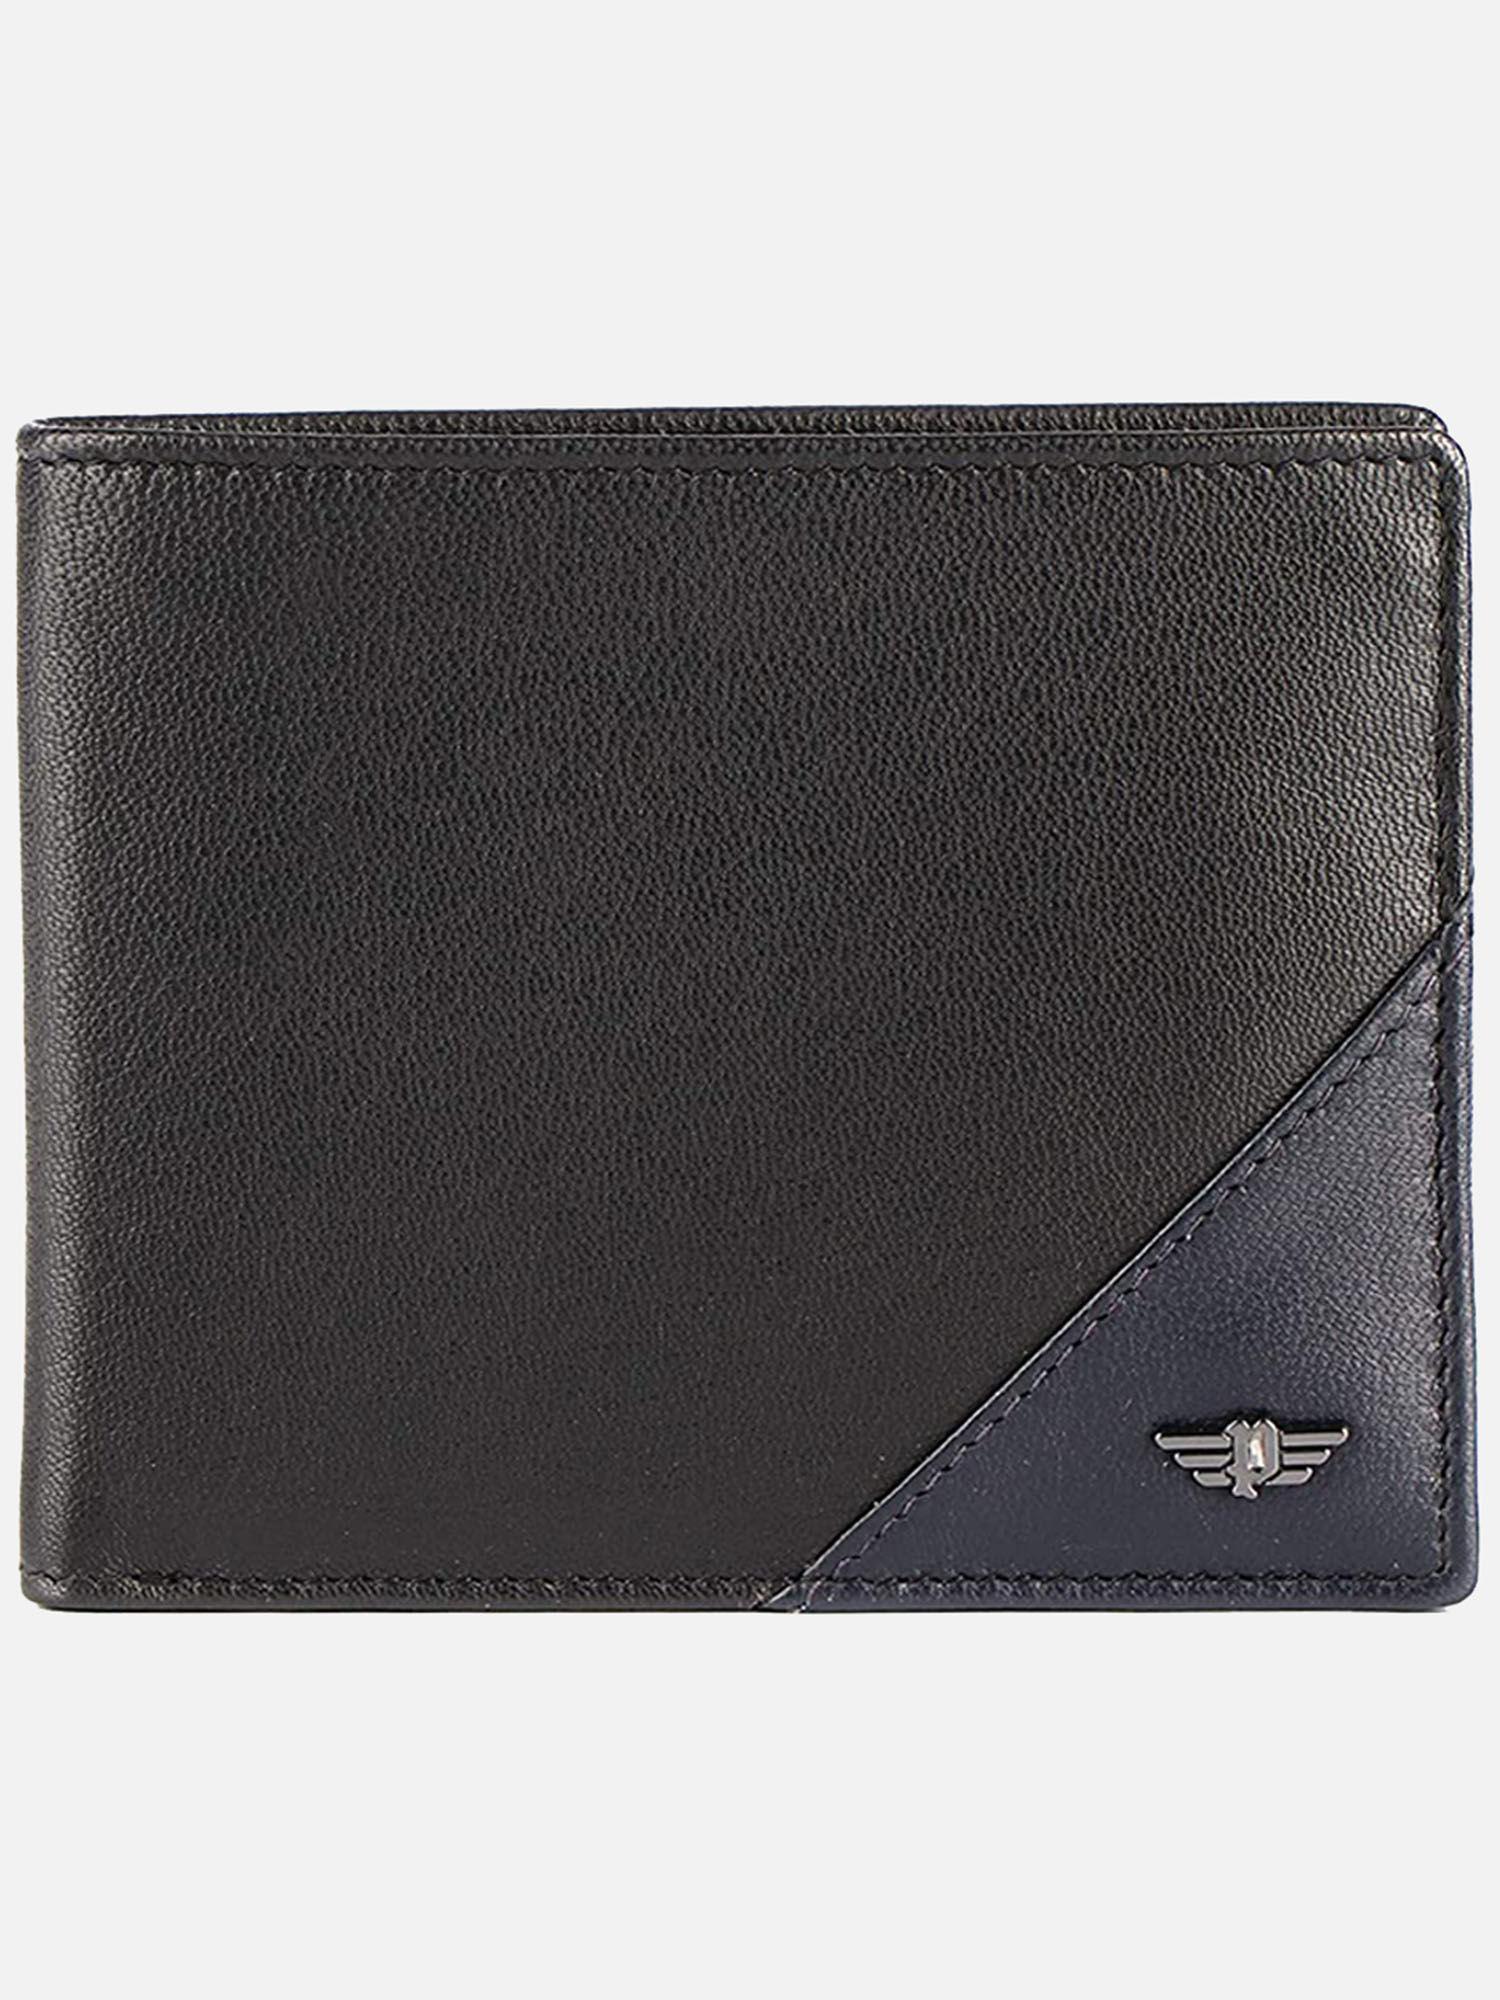 groix black bi fold coin leather men wallet